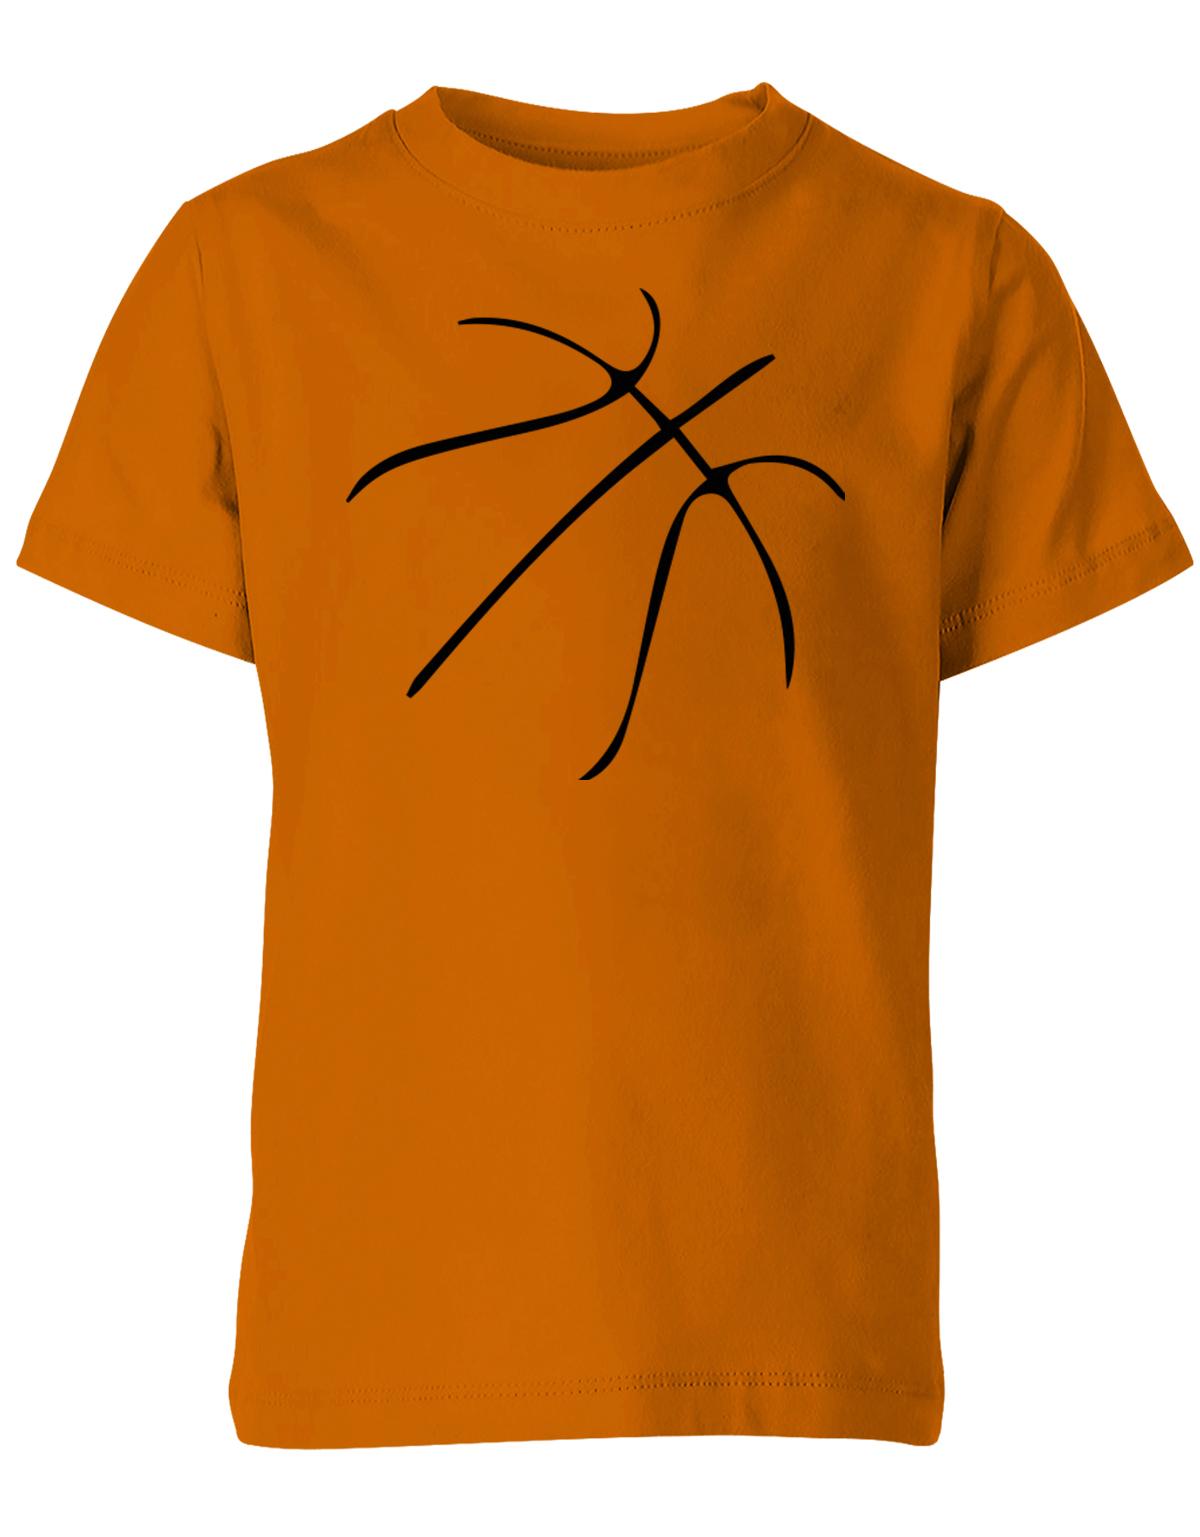 BAsketball-Muster-Kinder-Shirt-Orange